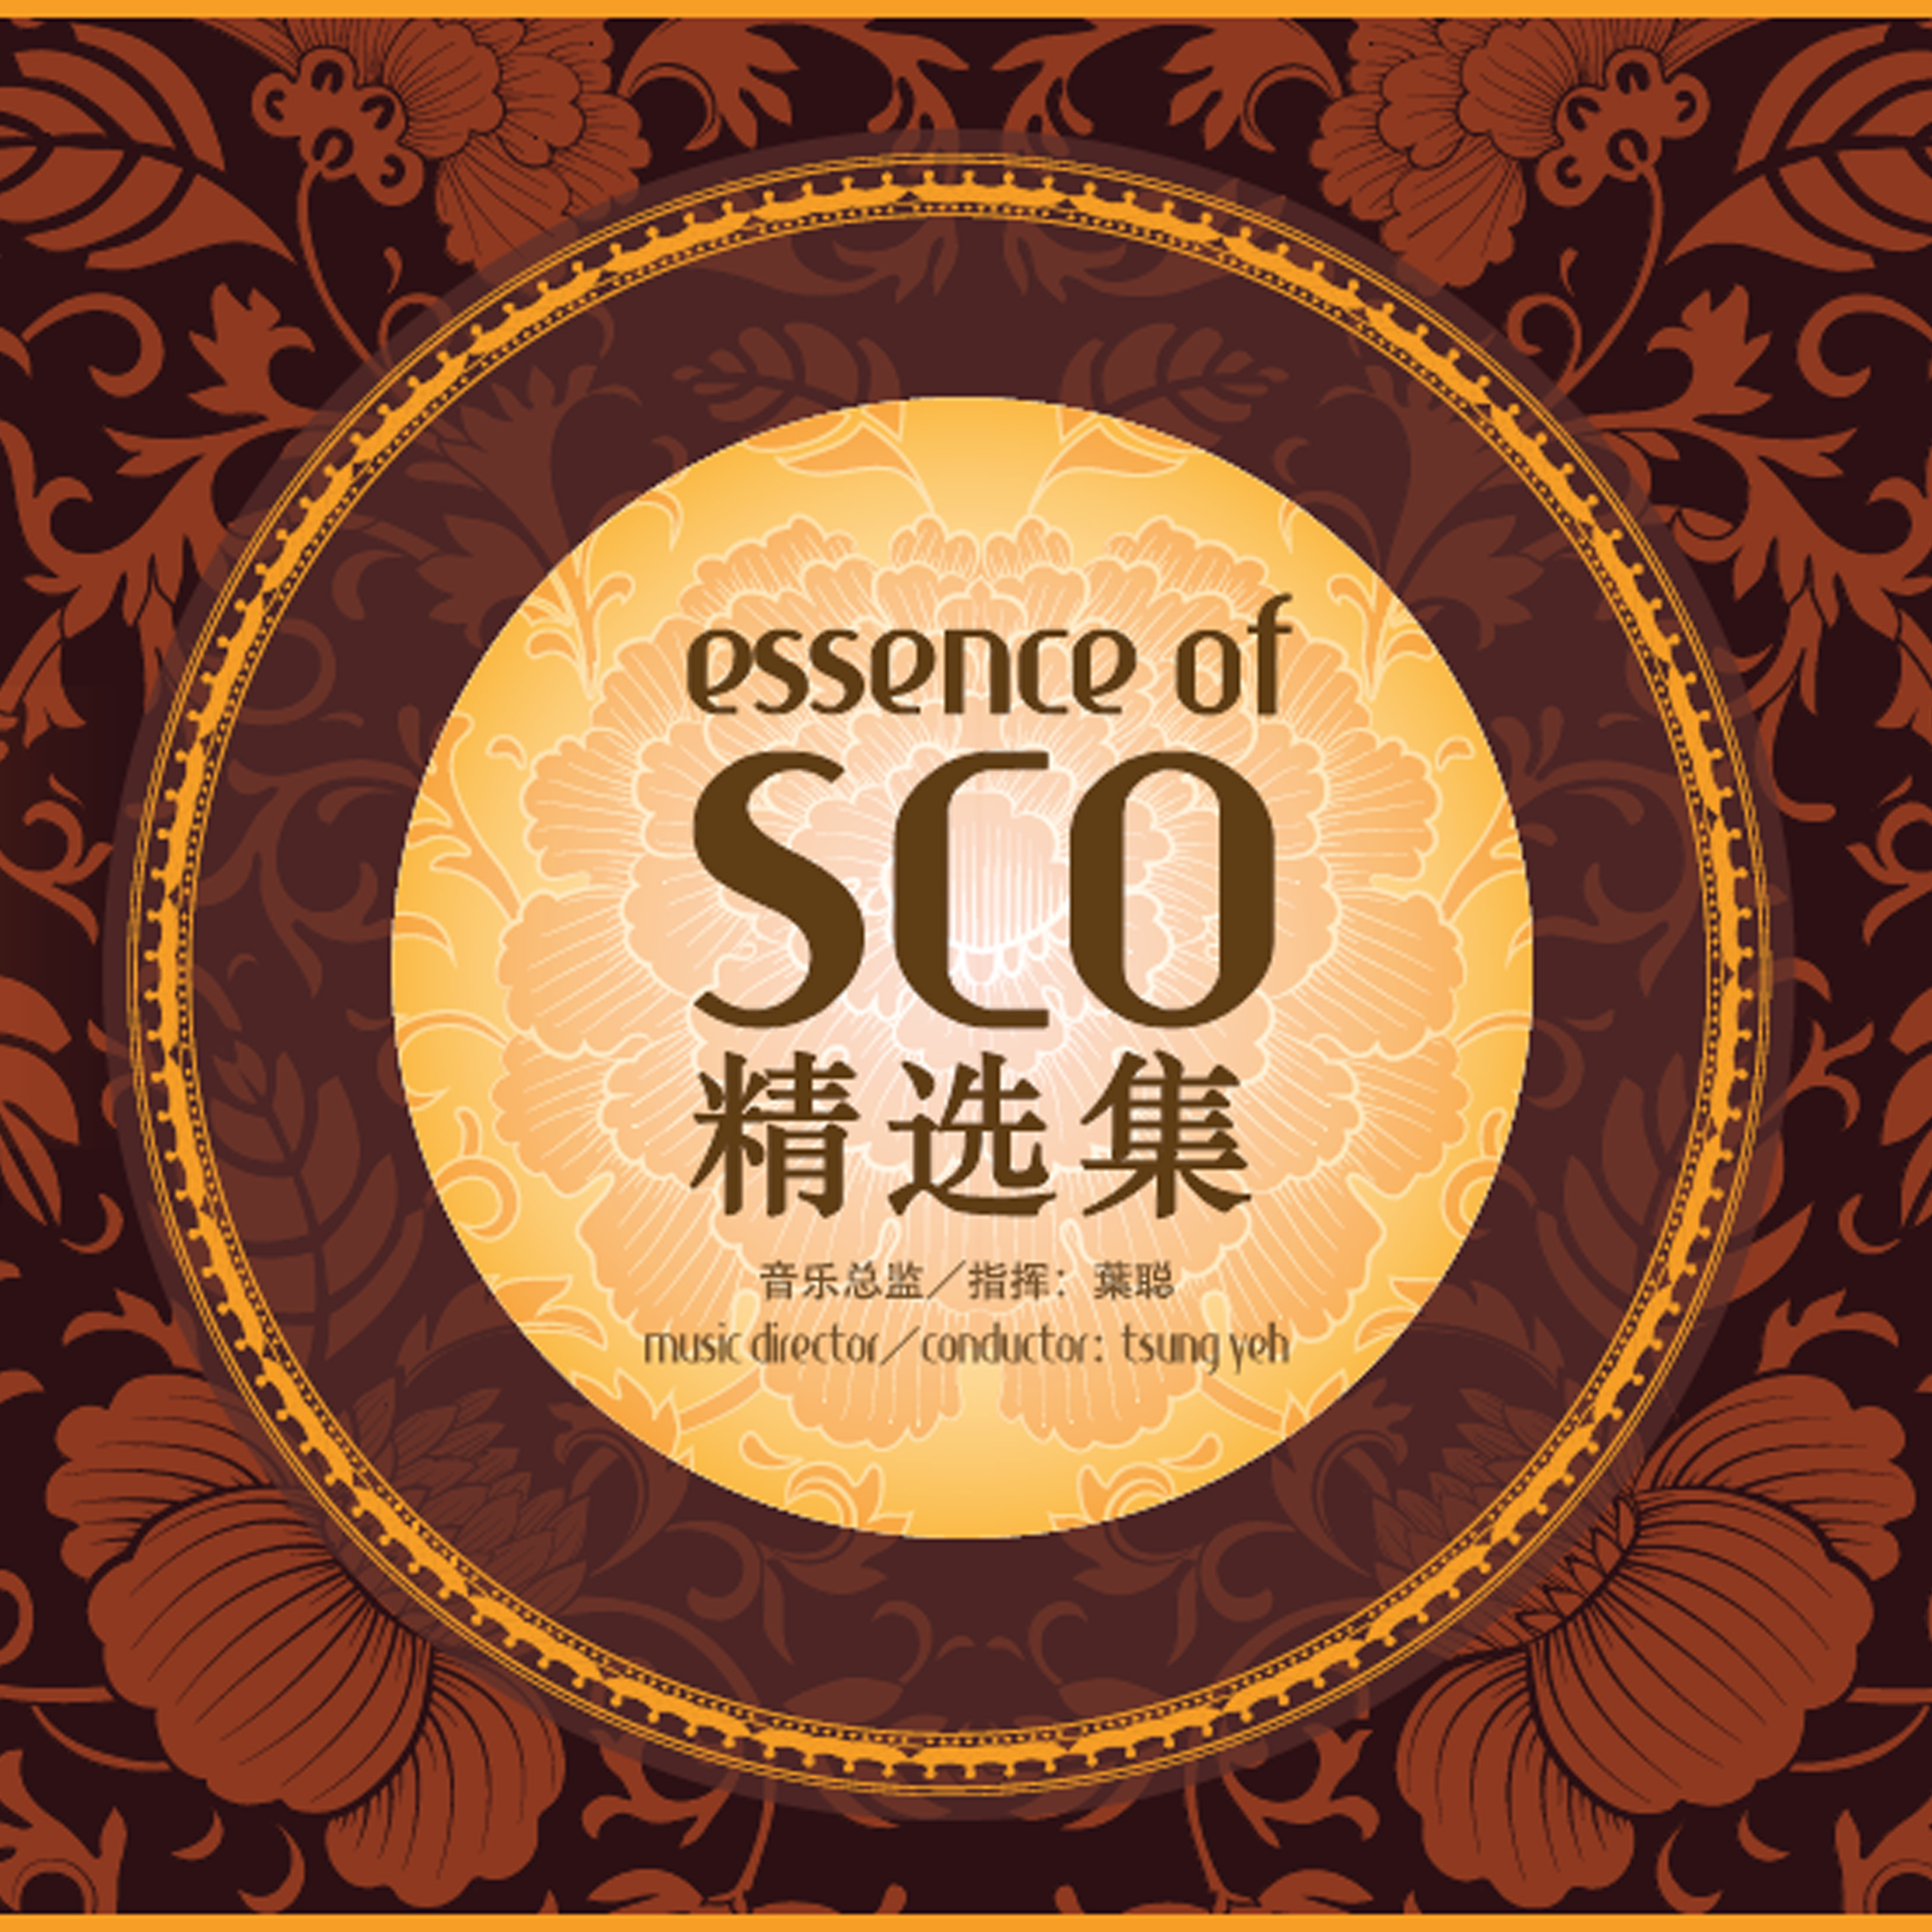 essence-of-sco-n 光碟与周边商品